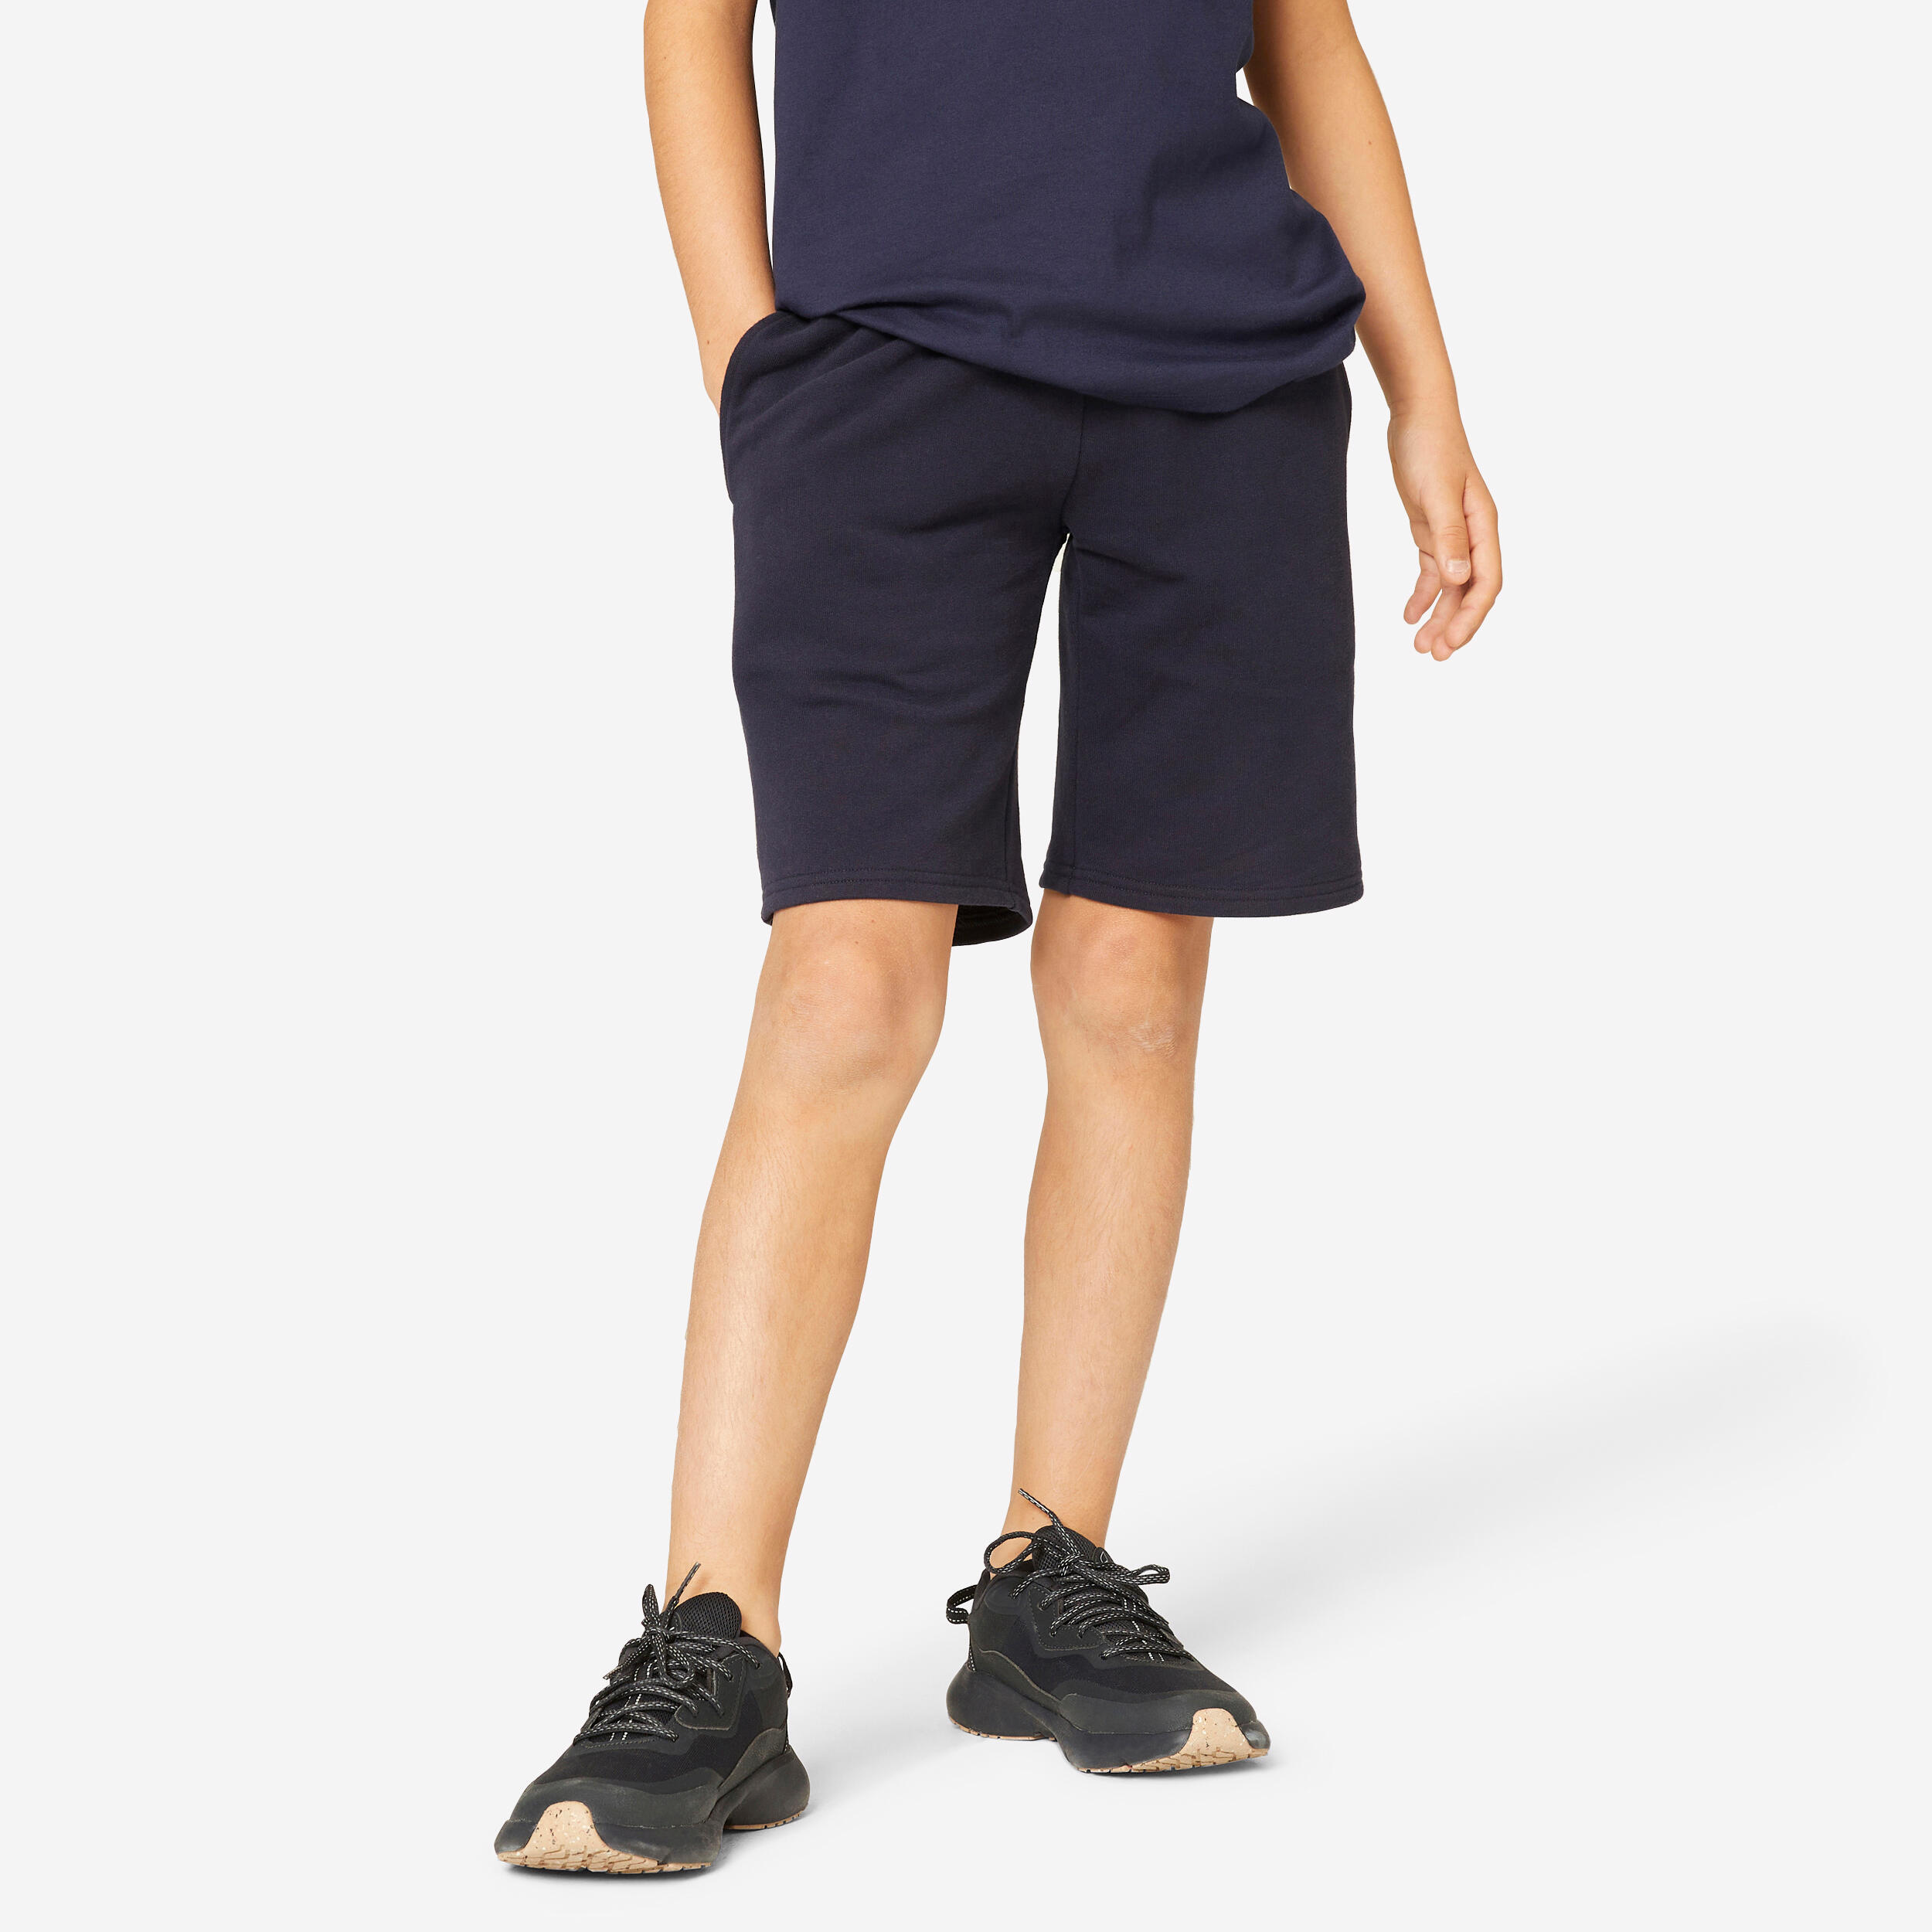 DOMYOS Kids' Unisex Cotton Shorts - Navy Blue